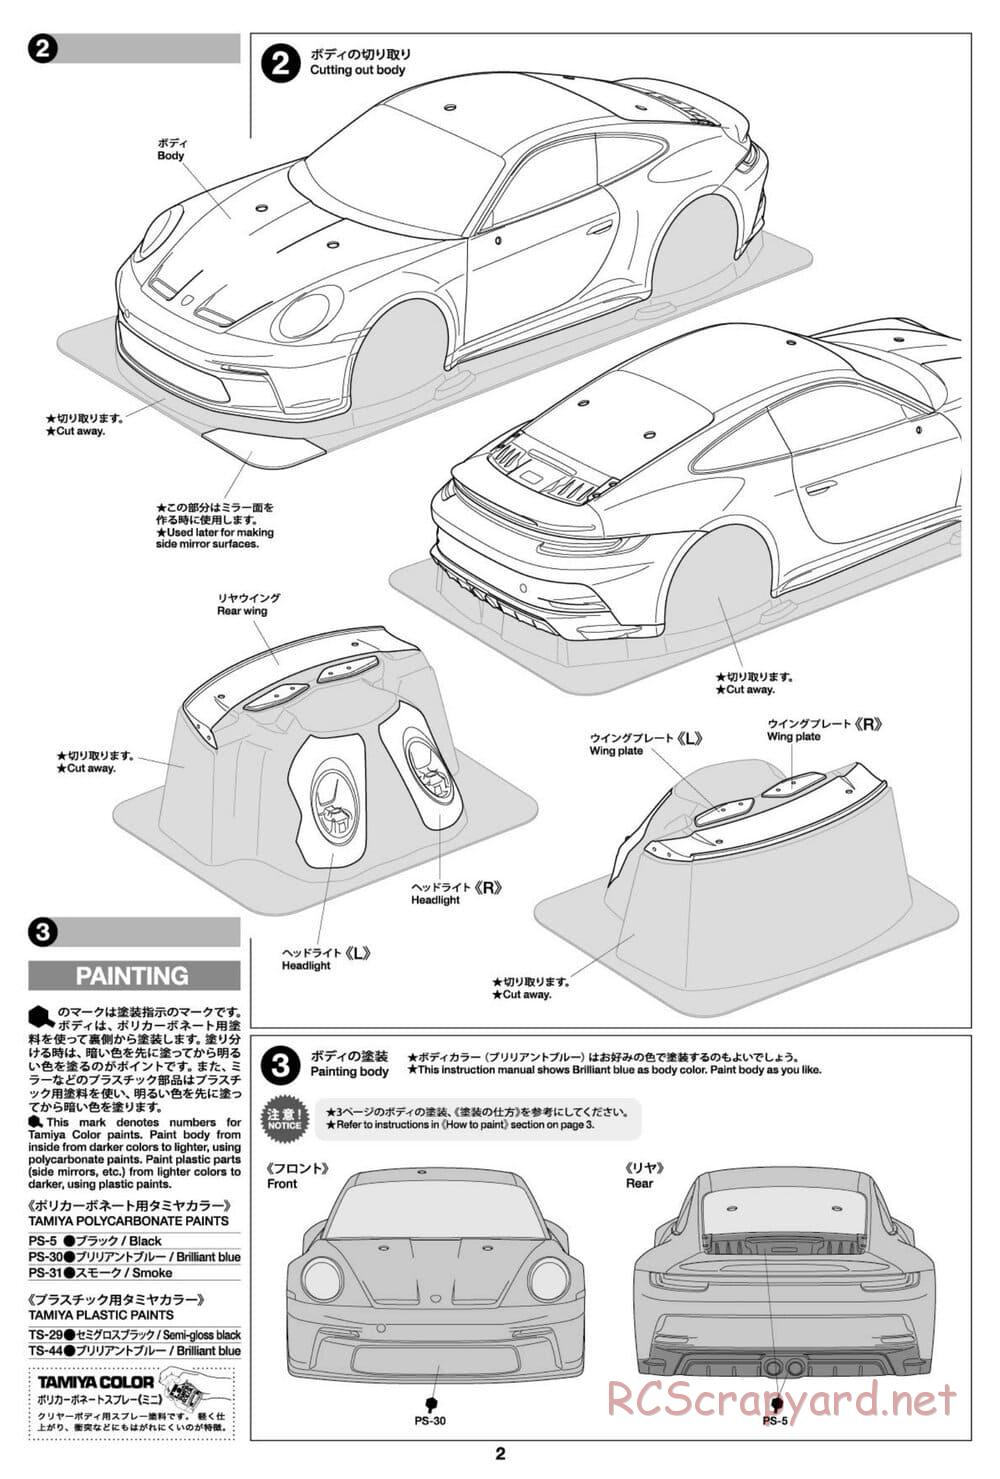 Tamiya - Porsche 911 GT3 (992) - TT-02 Chassis - Body Manual - Page 2